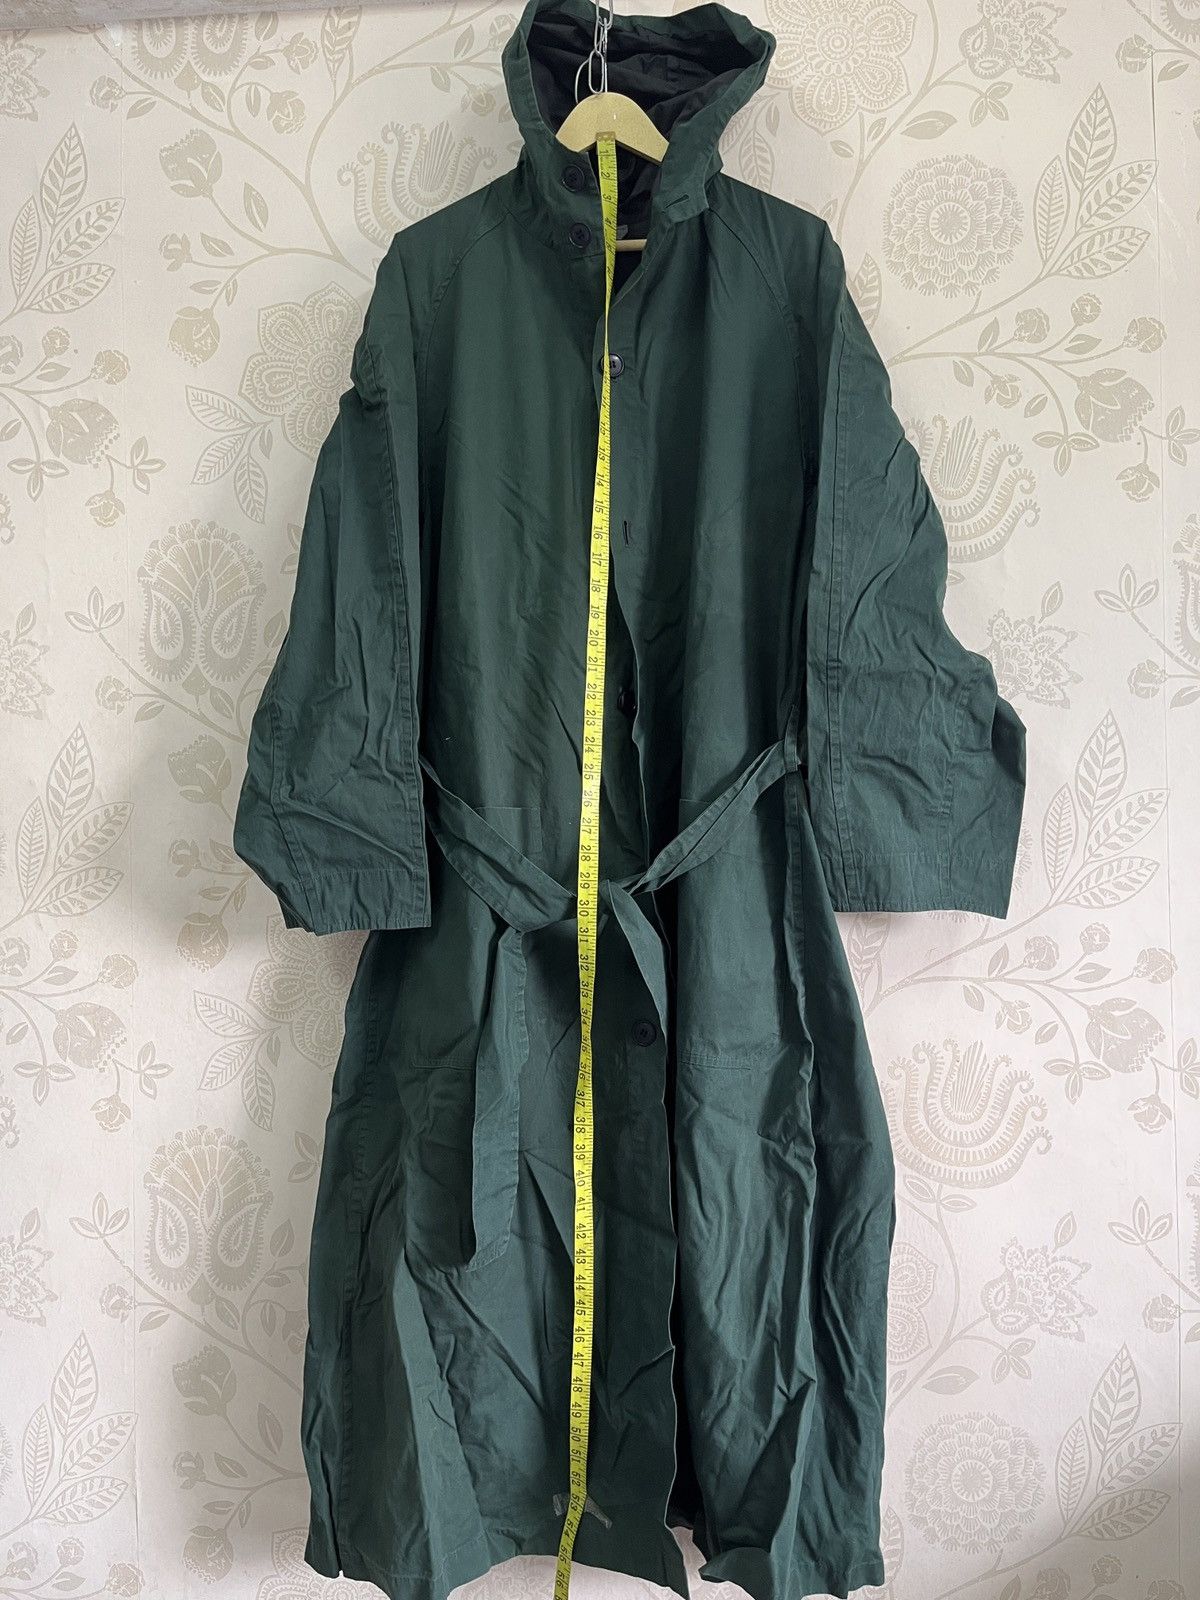 Vintage 1 Of 1 Sample Kenzo Japan Parka Long Coat With Hood - 2